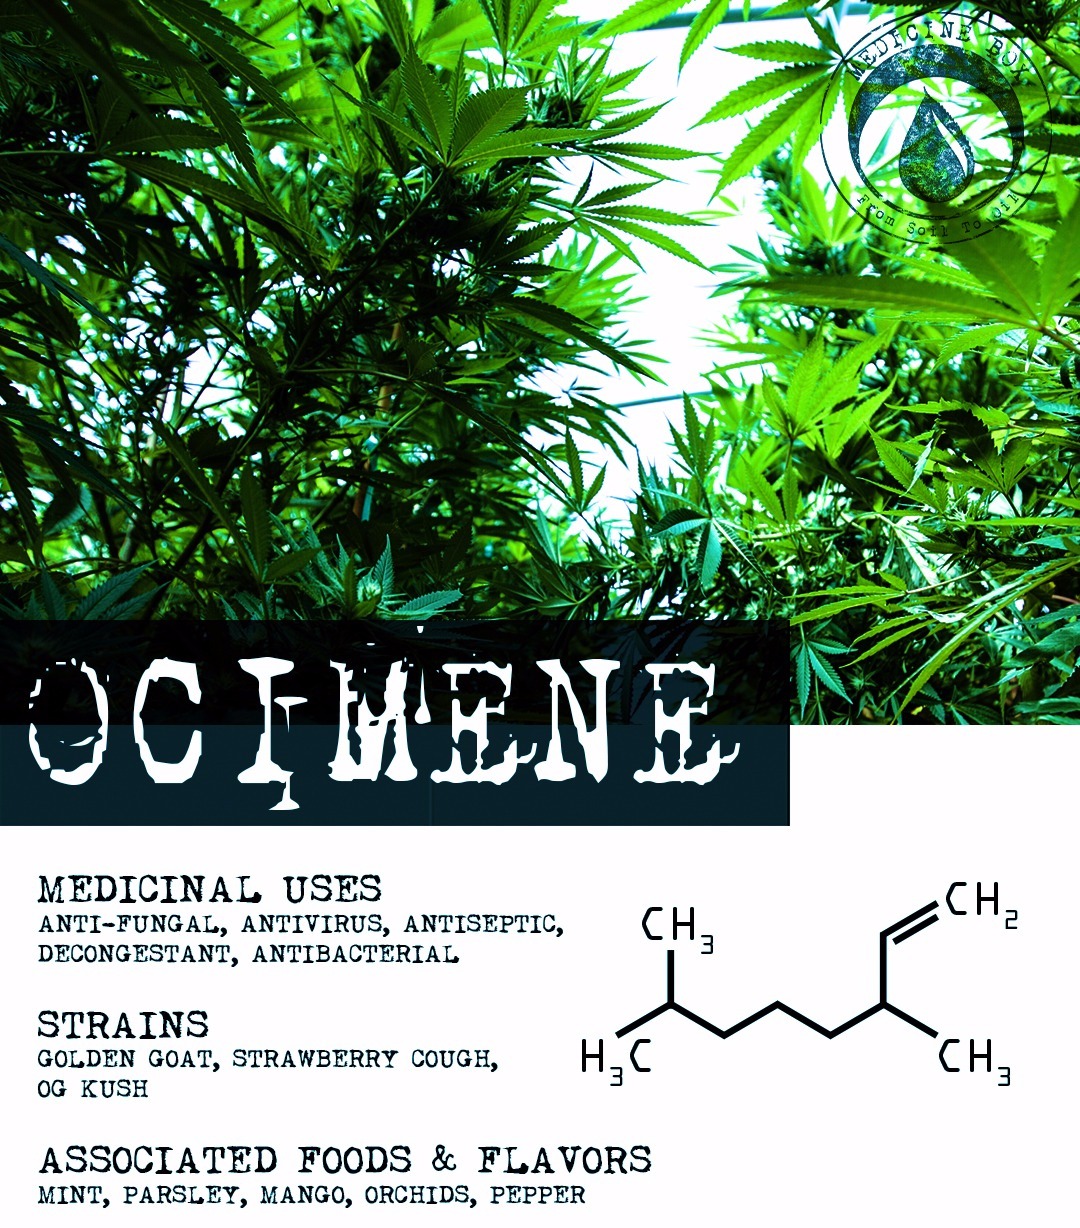 Terpene-Tuesday-from-Medicine-Box-Ocimene - Copy